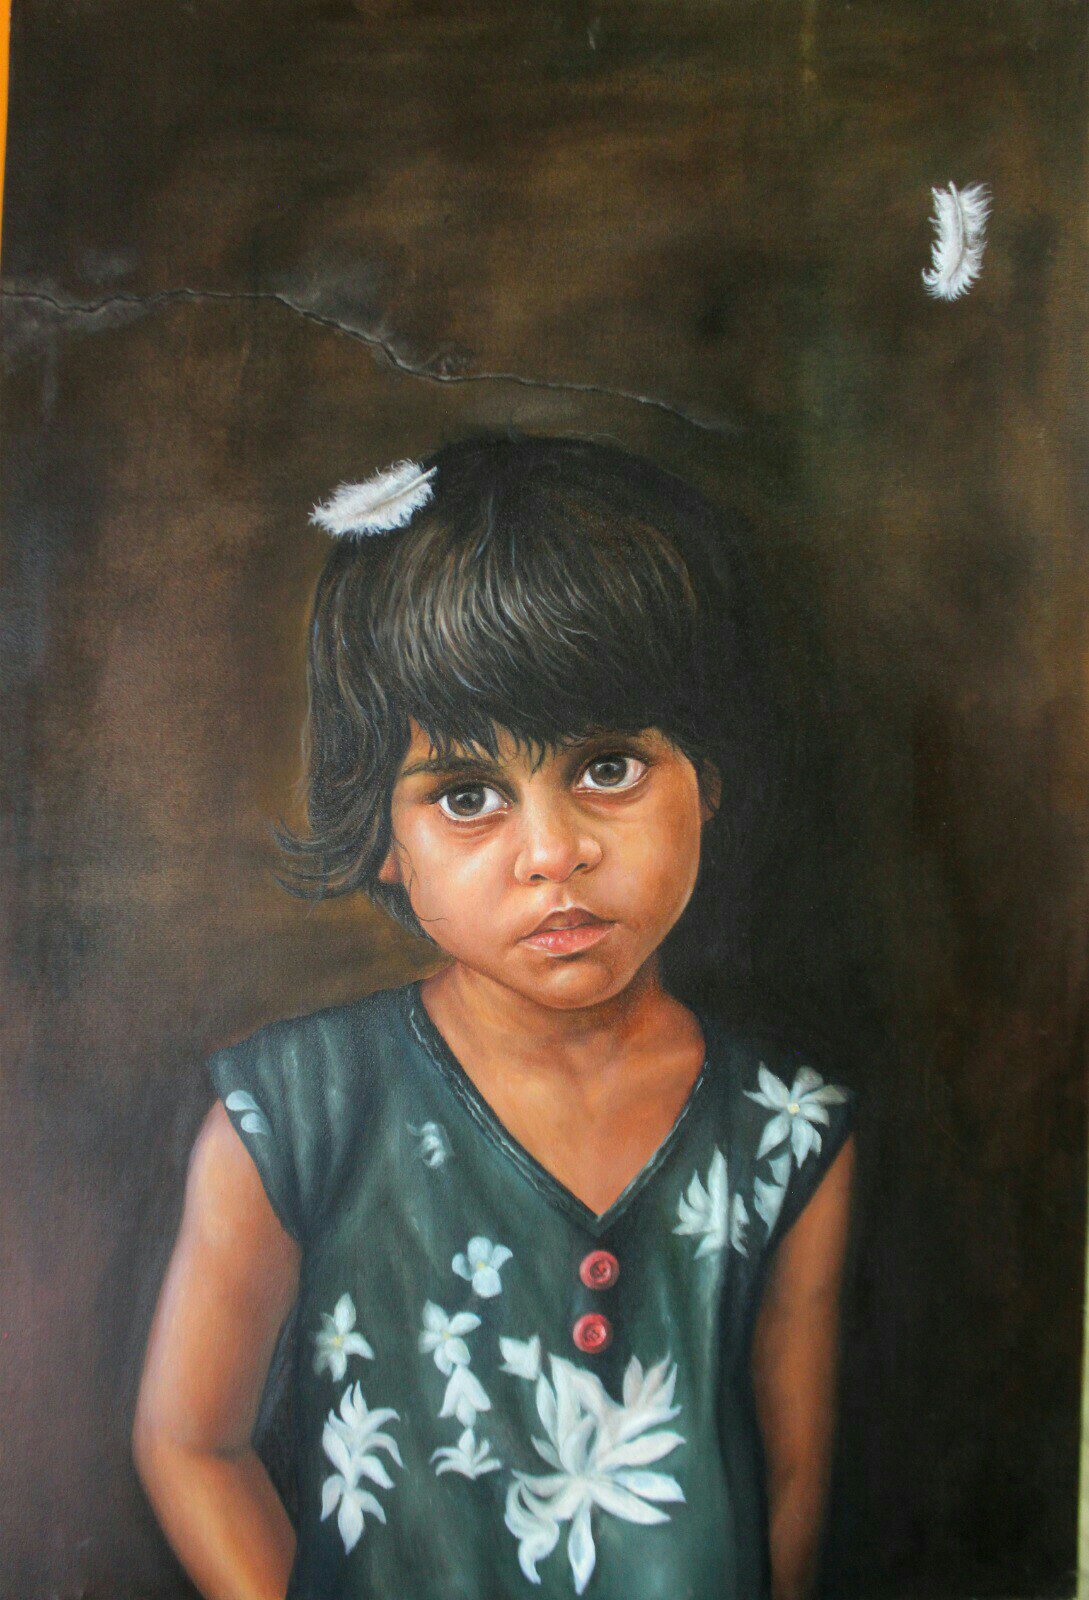 Artist: Yasir Noor <br>Medium: Oil on canvas <br> Size:  24x36 inches